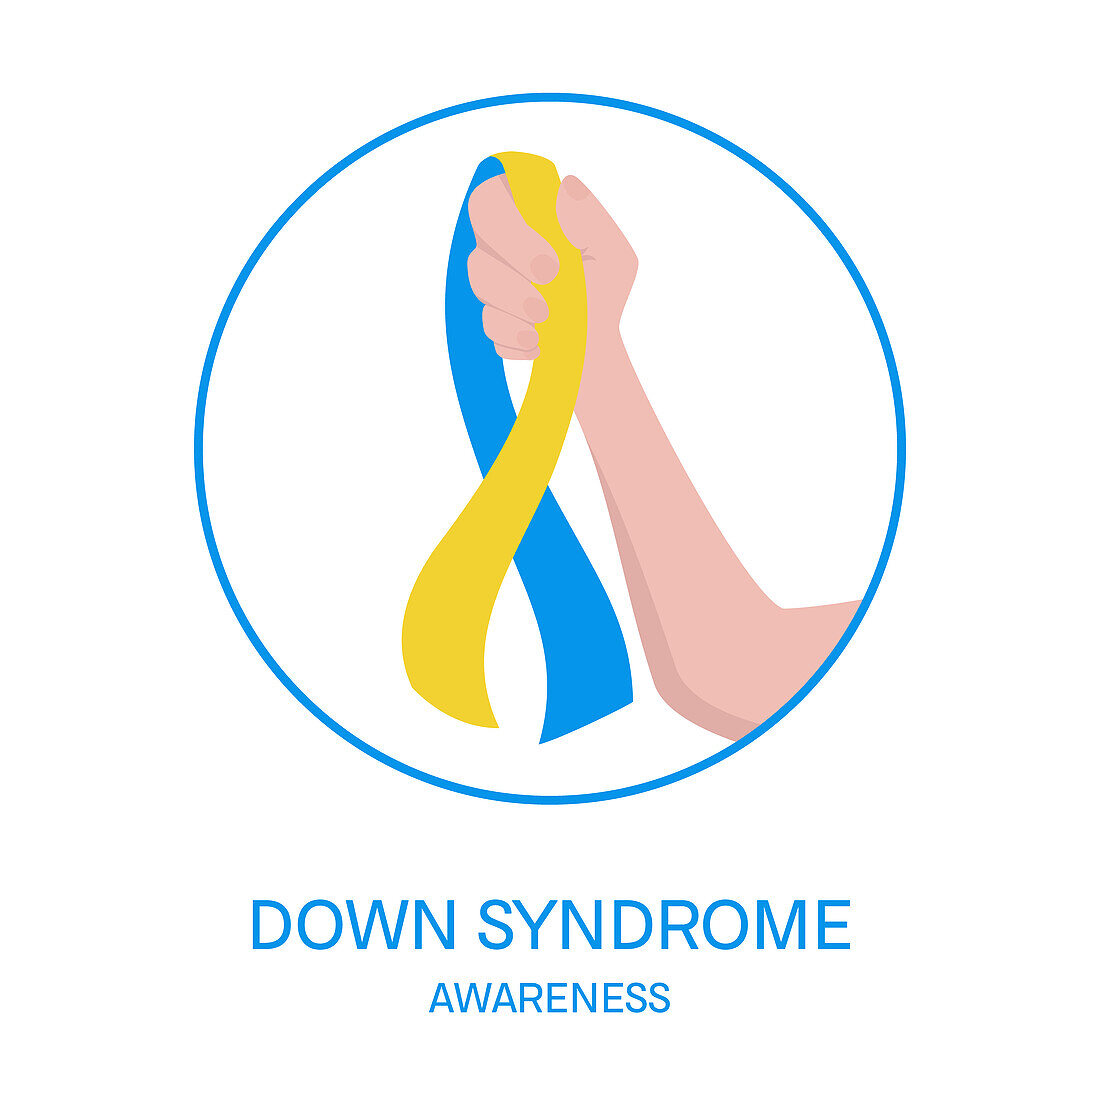 Down syndrome awareness ribbon, conceptual illustration